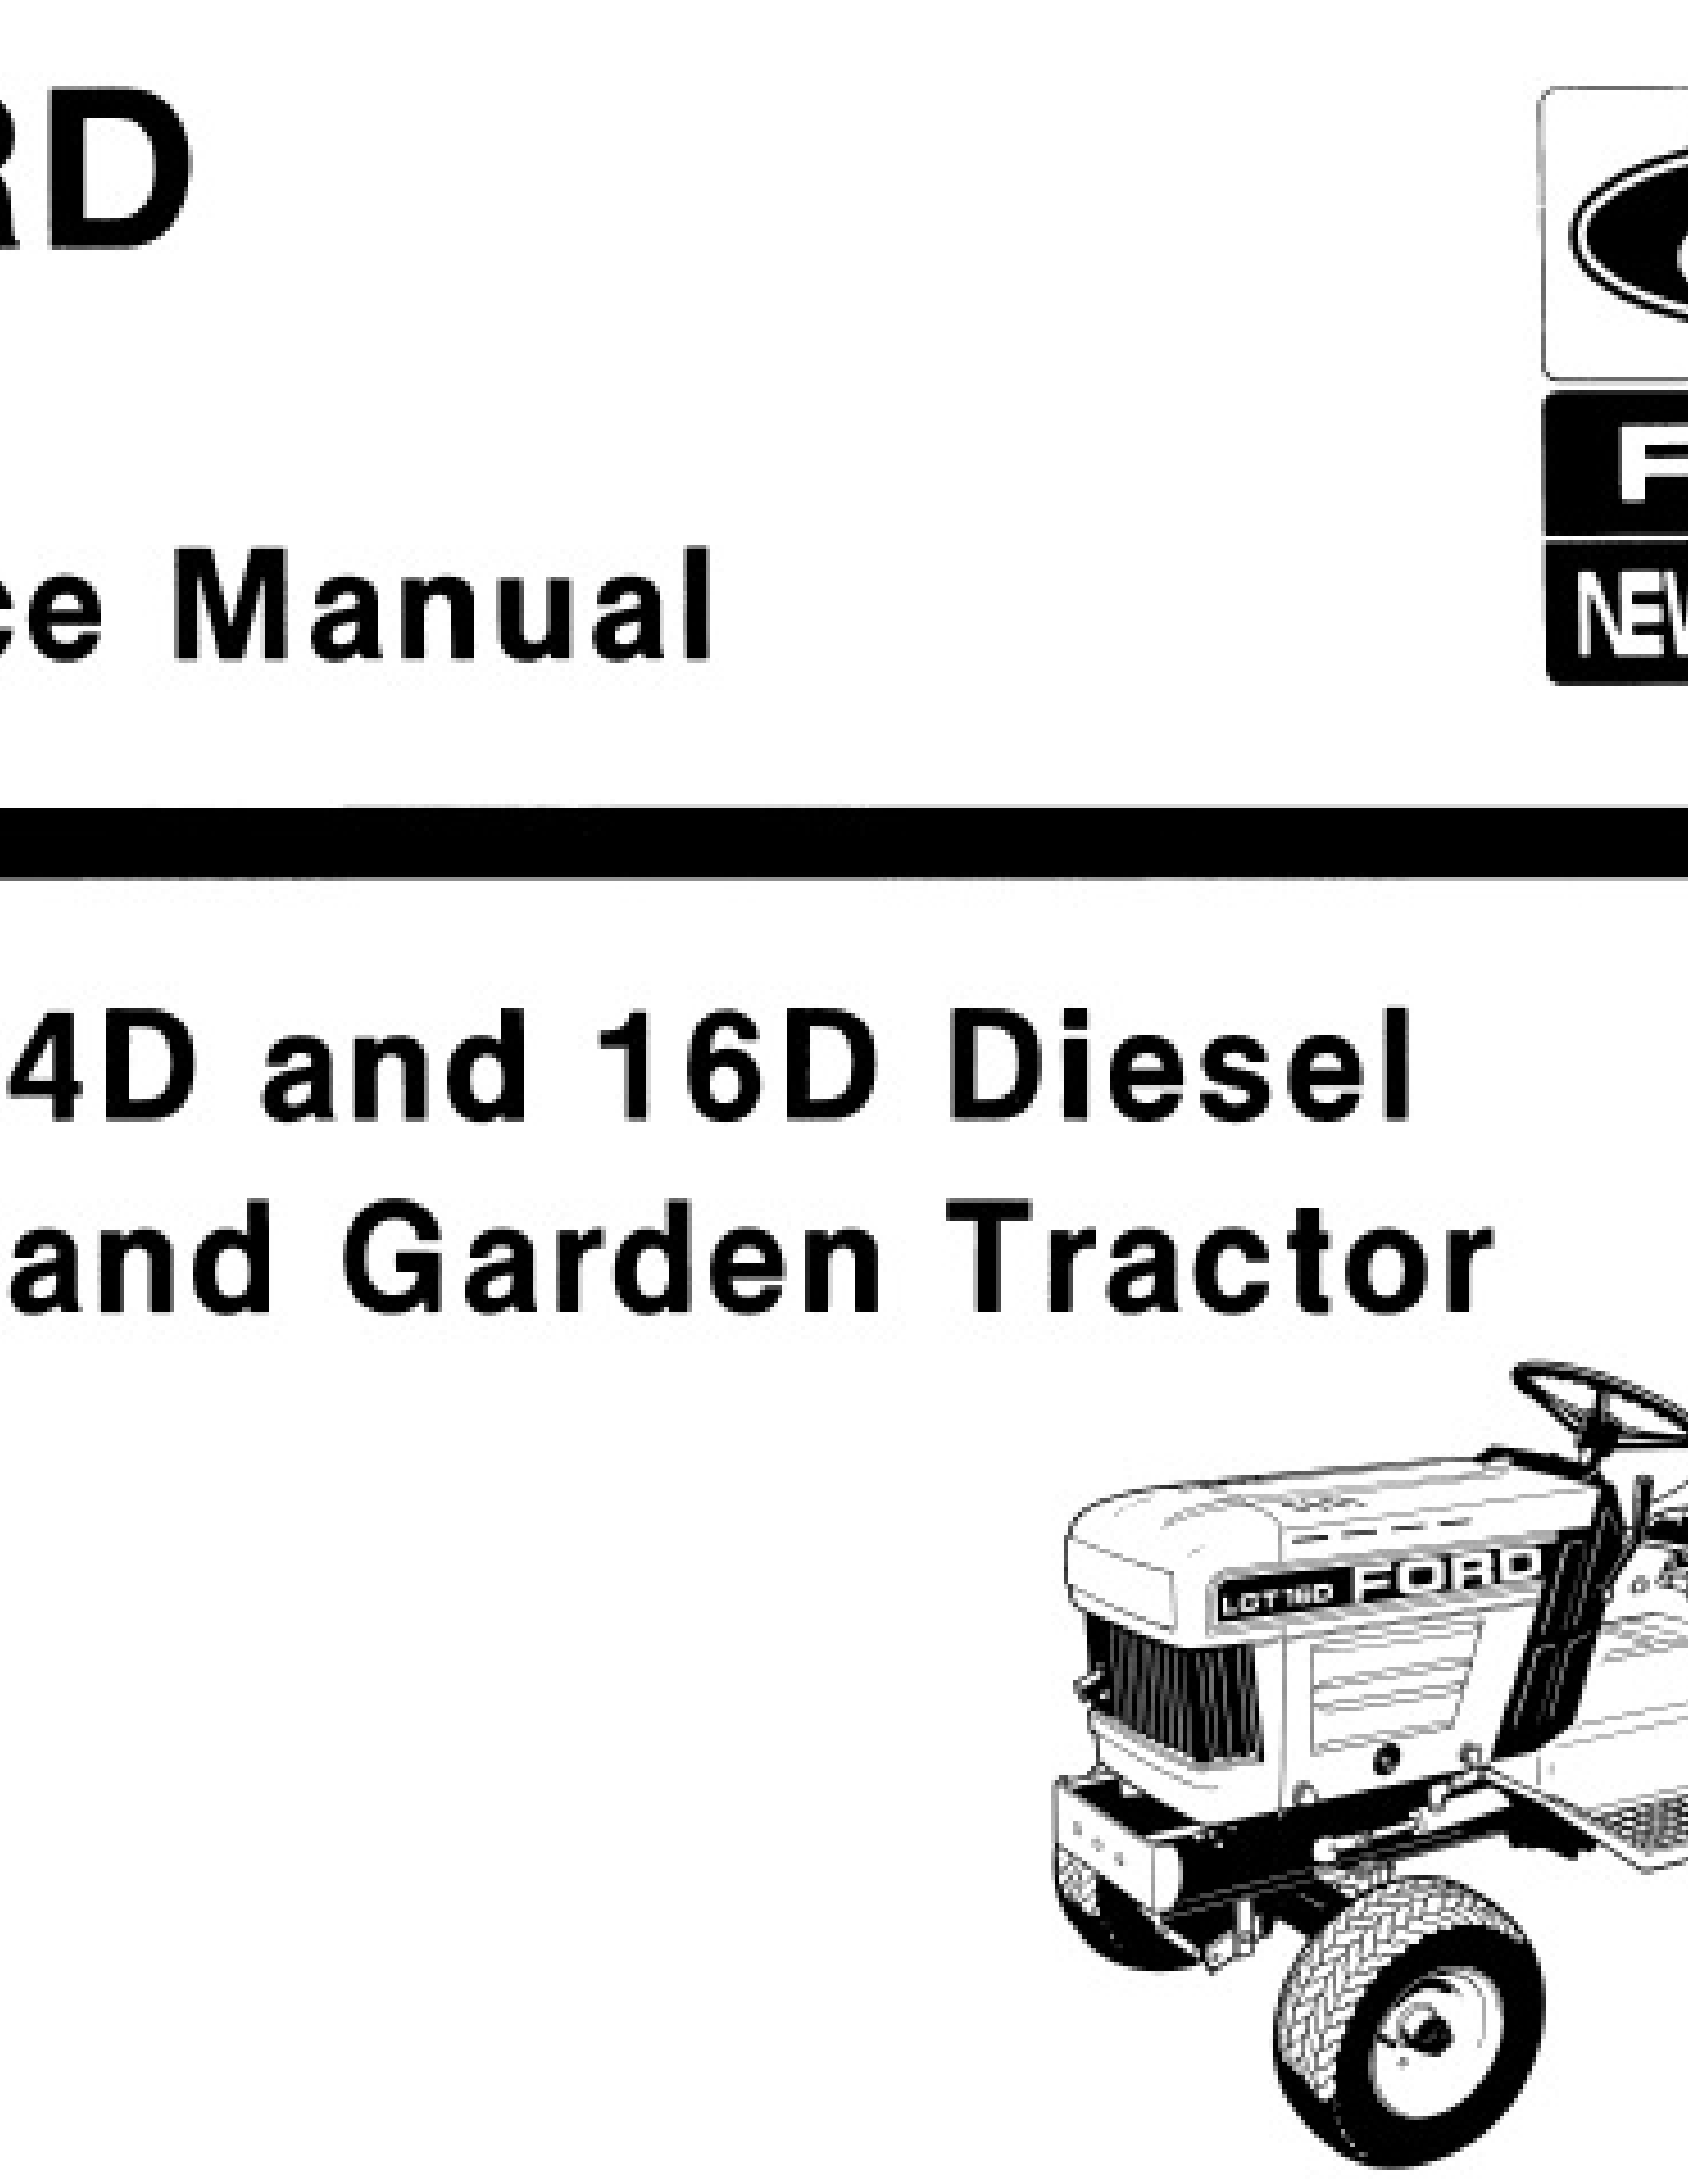  14D LGT Diesel Lawn Garden Tractor manual